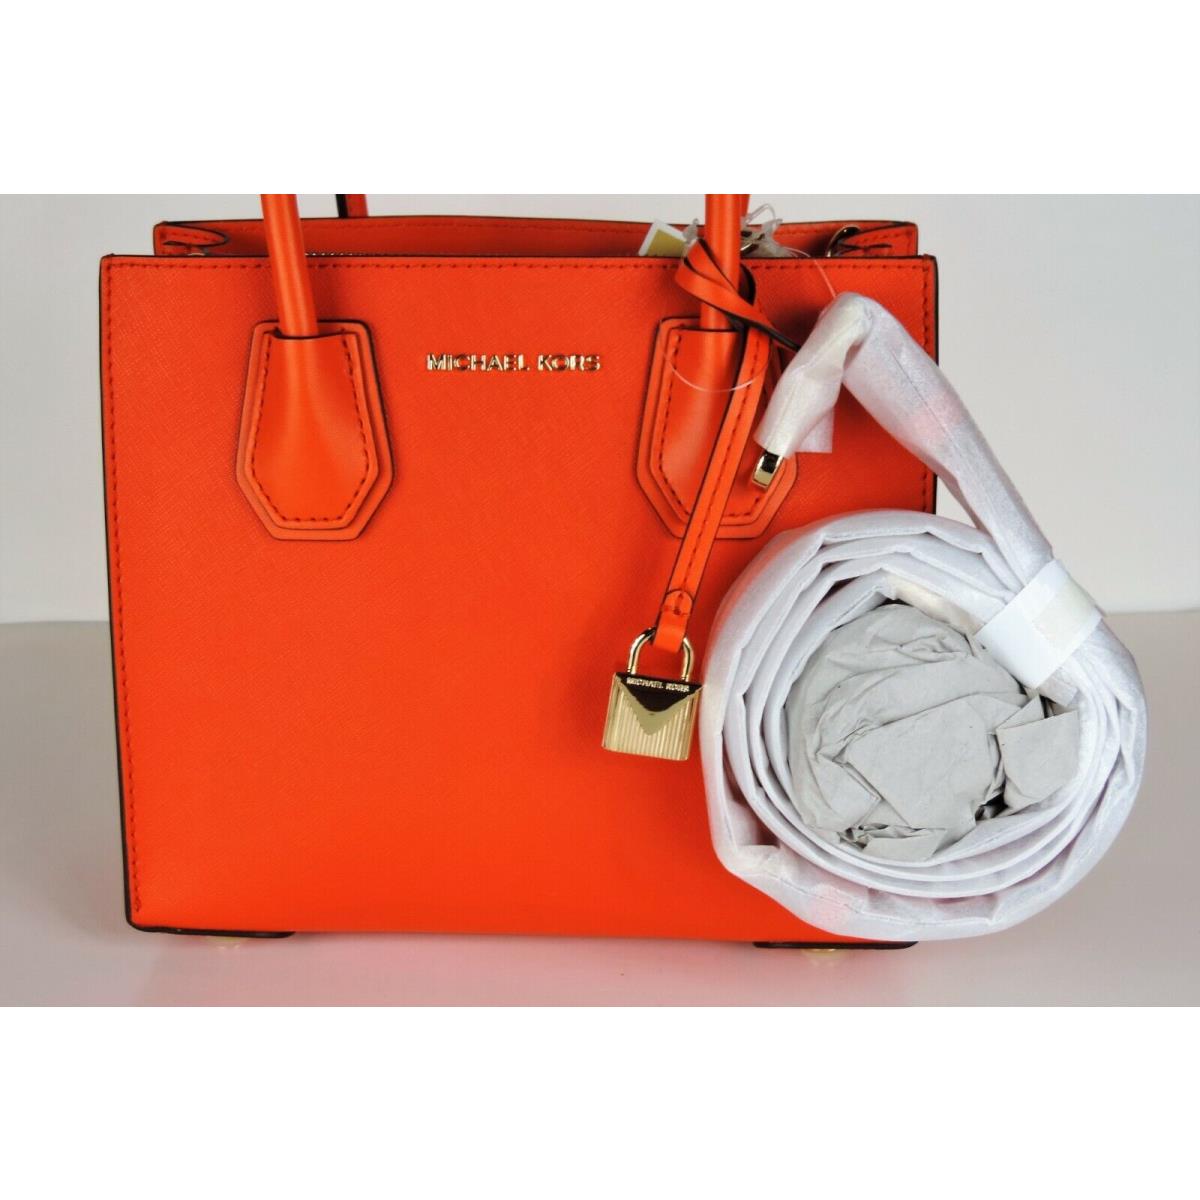 MICHAEL KORS crossbody bags for woman  Orange  Michael Kors crossbody  bags 32F7GGNM8L online on GIGLIOCOM